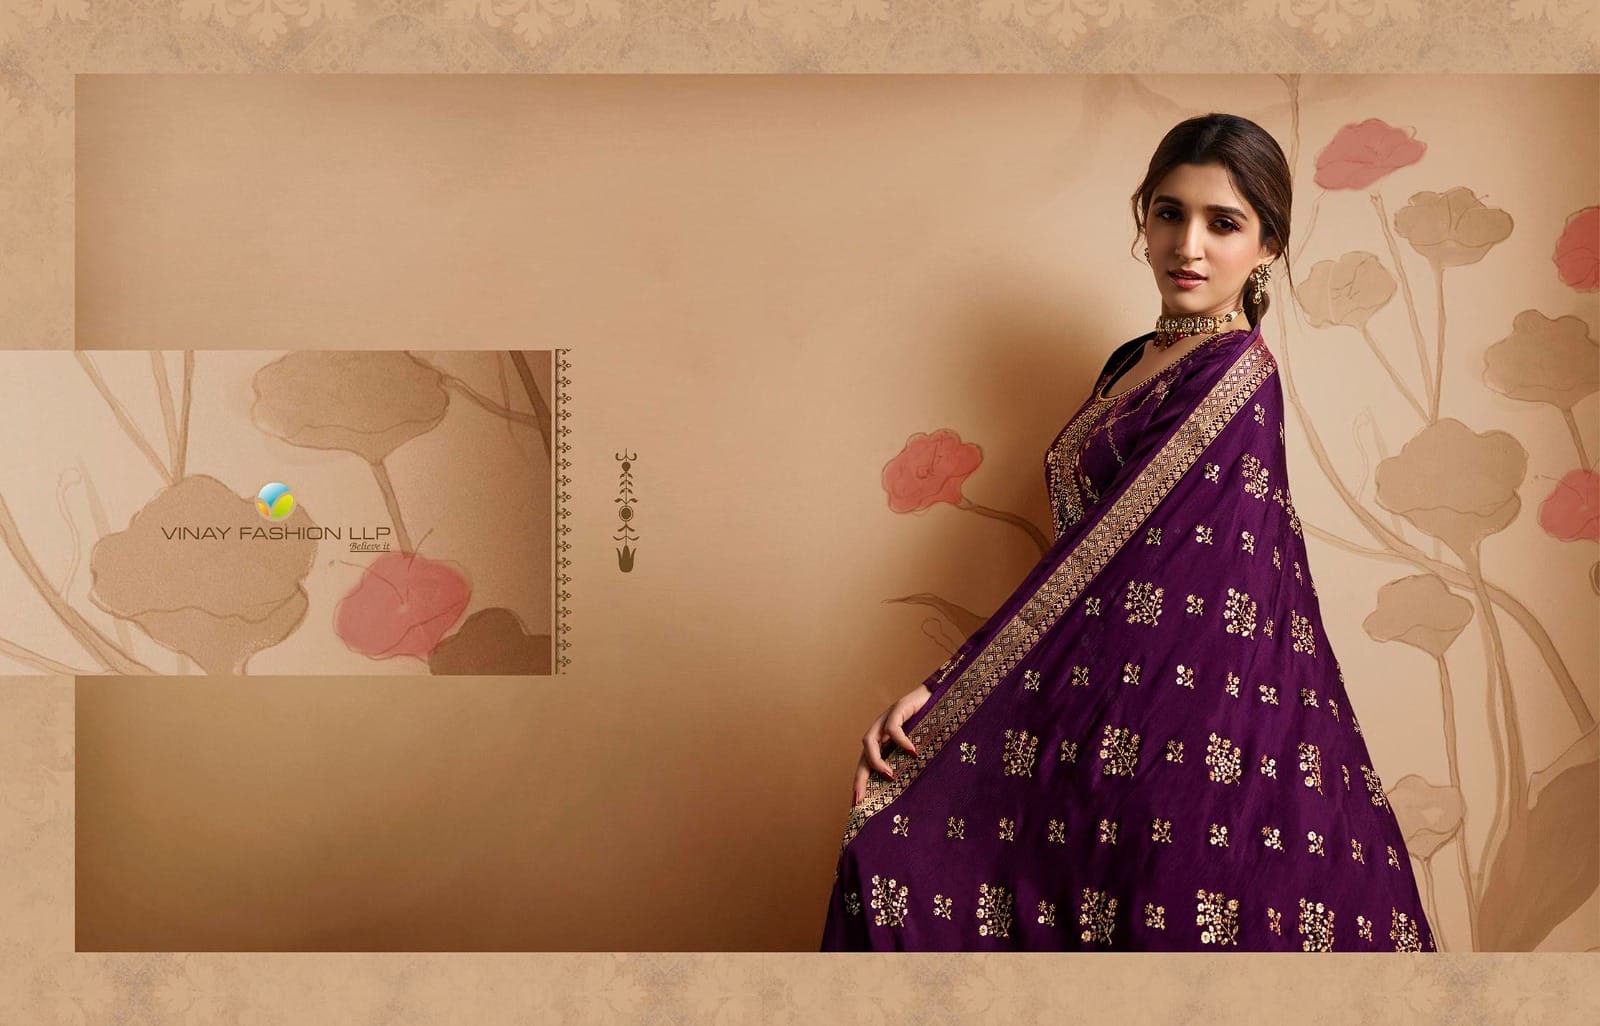 vinay fashion kaseesh sana 2 dola jacouard innovative look salwar suit catalog